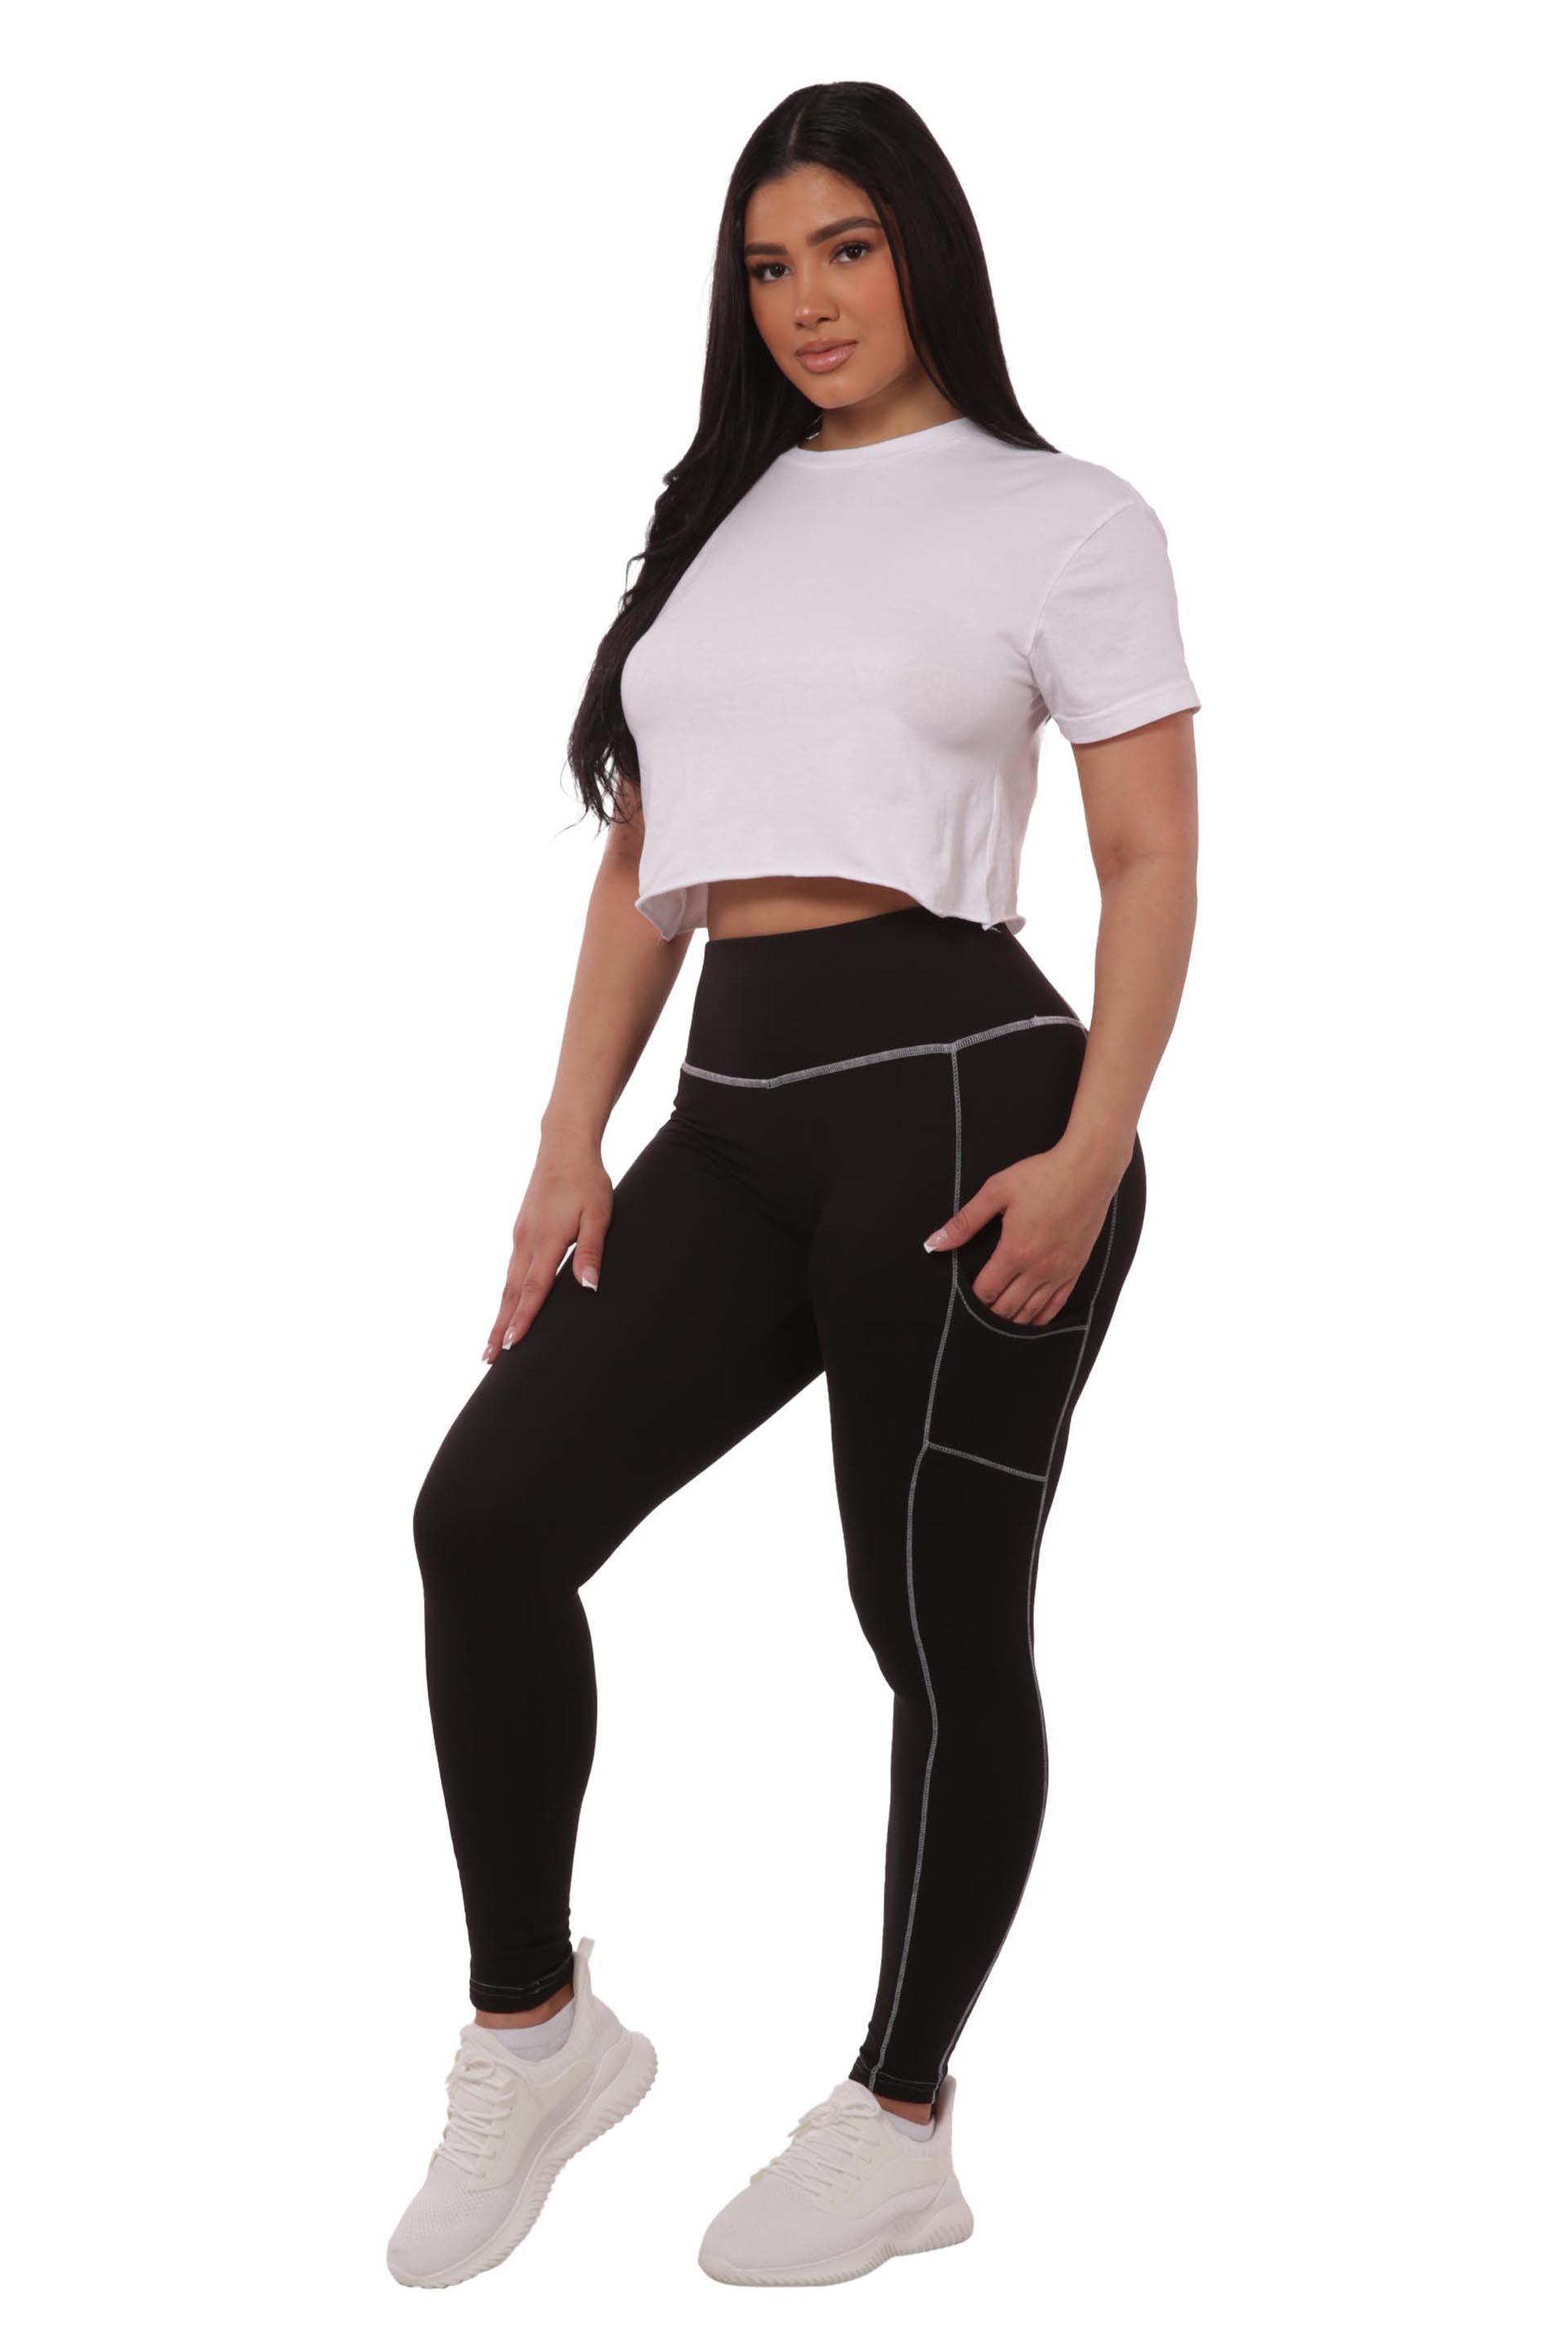 ShoSho Womens Plus Size Sports Leggings High Waist Yoga Pants with Mesh  Panels & Side Criss Cross Strap Panels Solid Black 3X